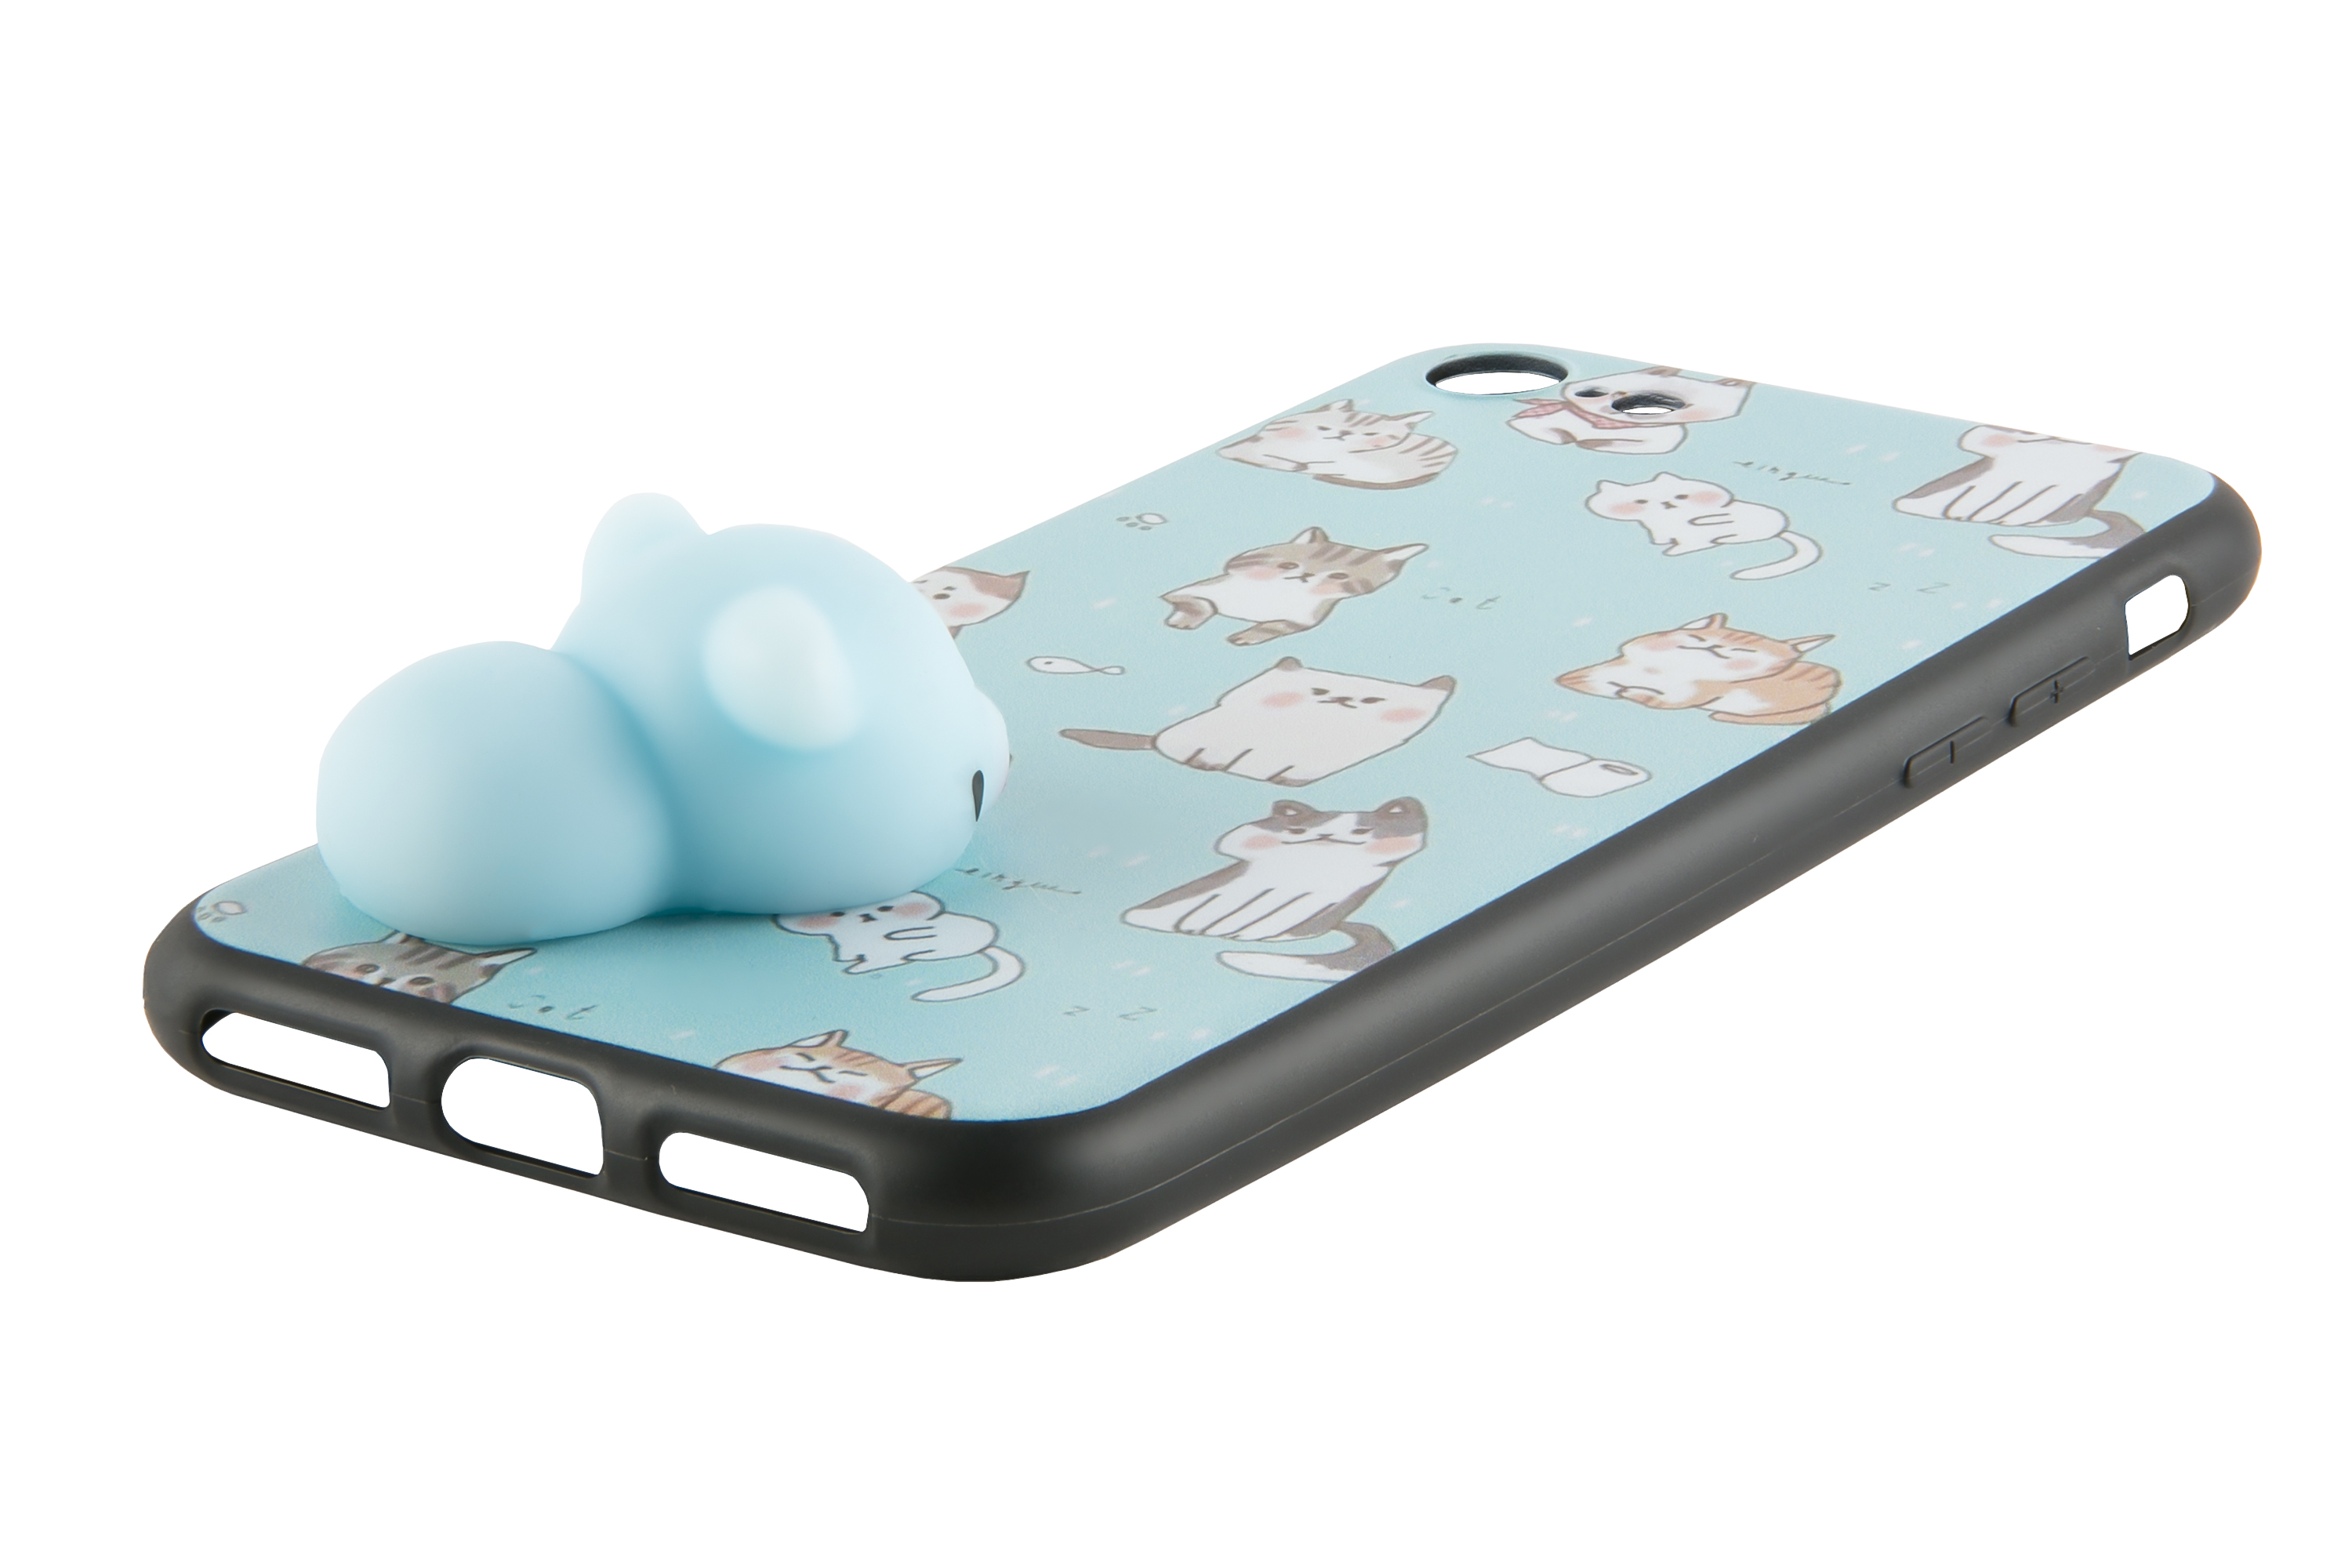 Накладка силикон iBox Crystal Jelly Case для Apple iPhone 8, дизайн №1